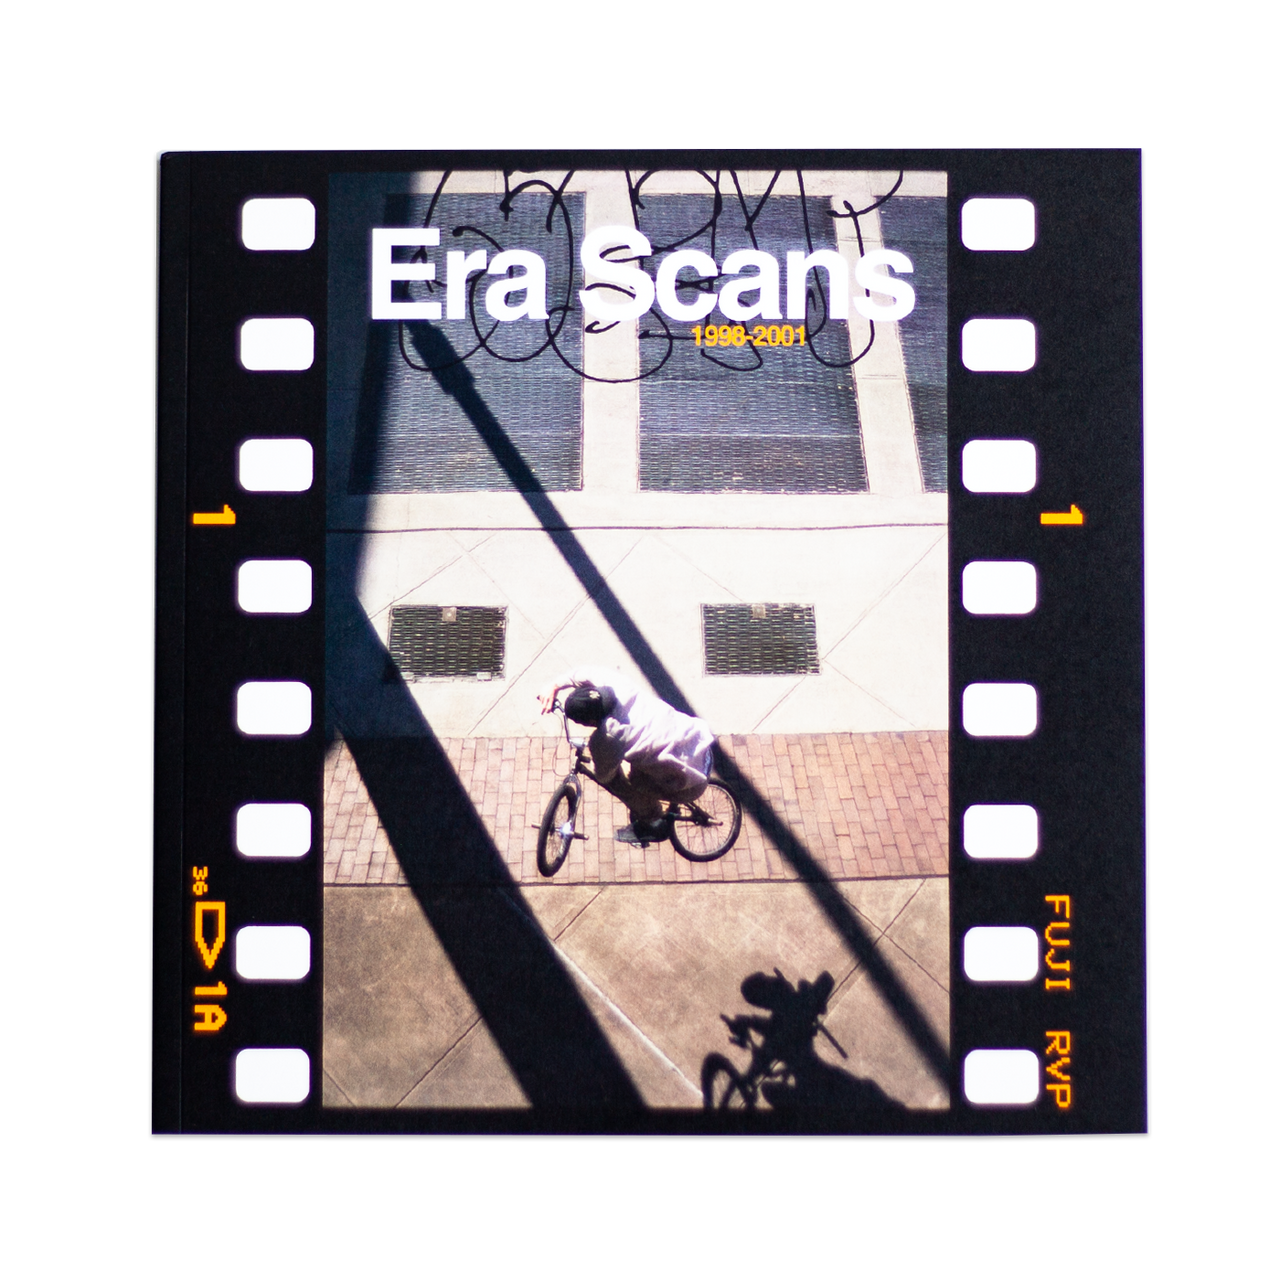 "Era Scans" 1998-2001 By Jeff Zielinski